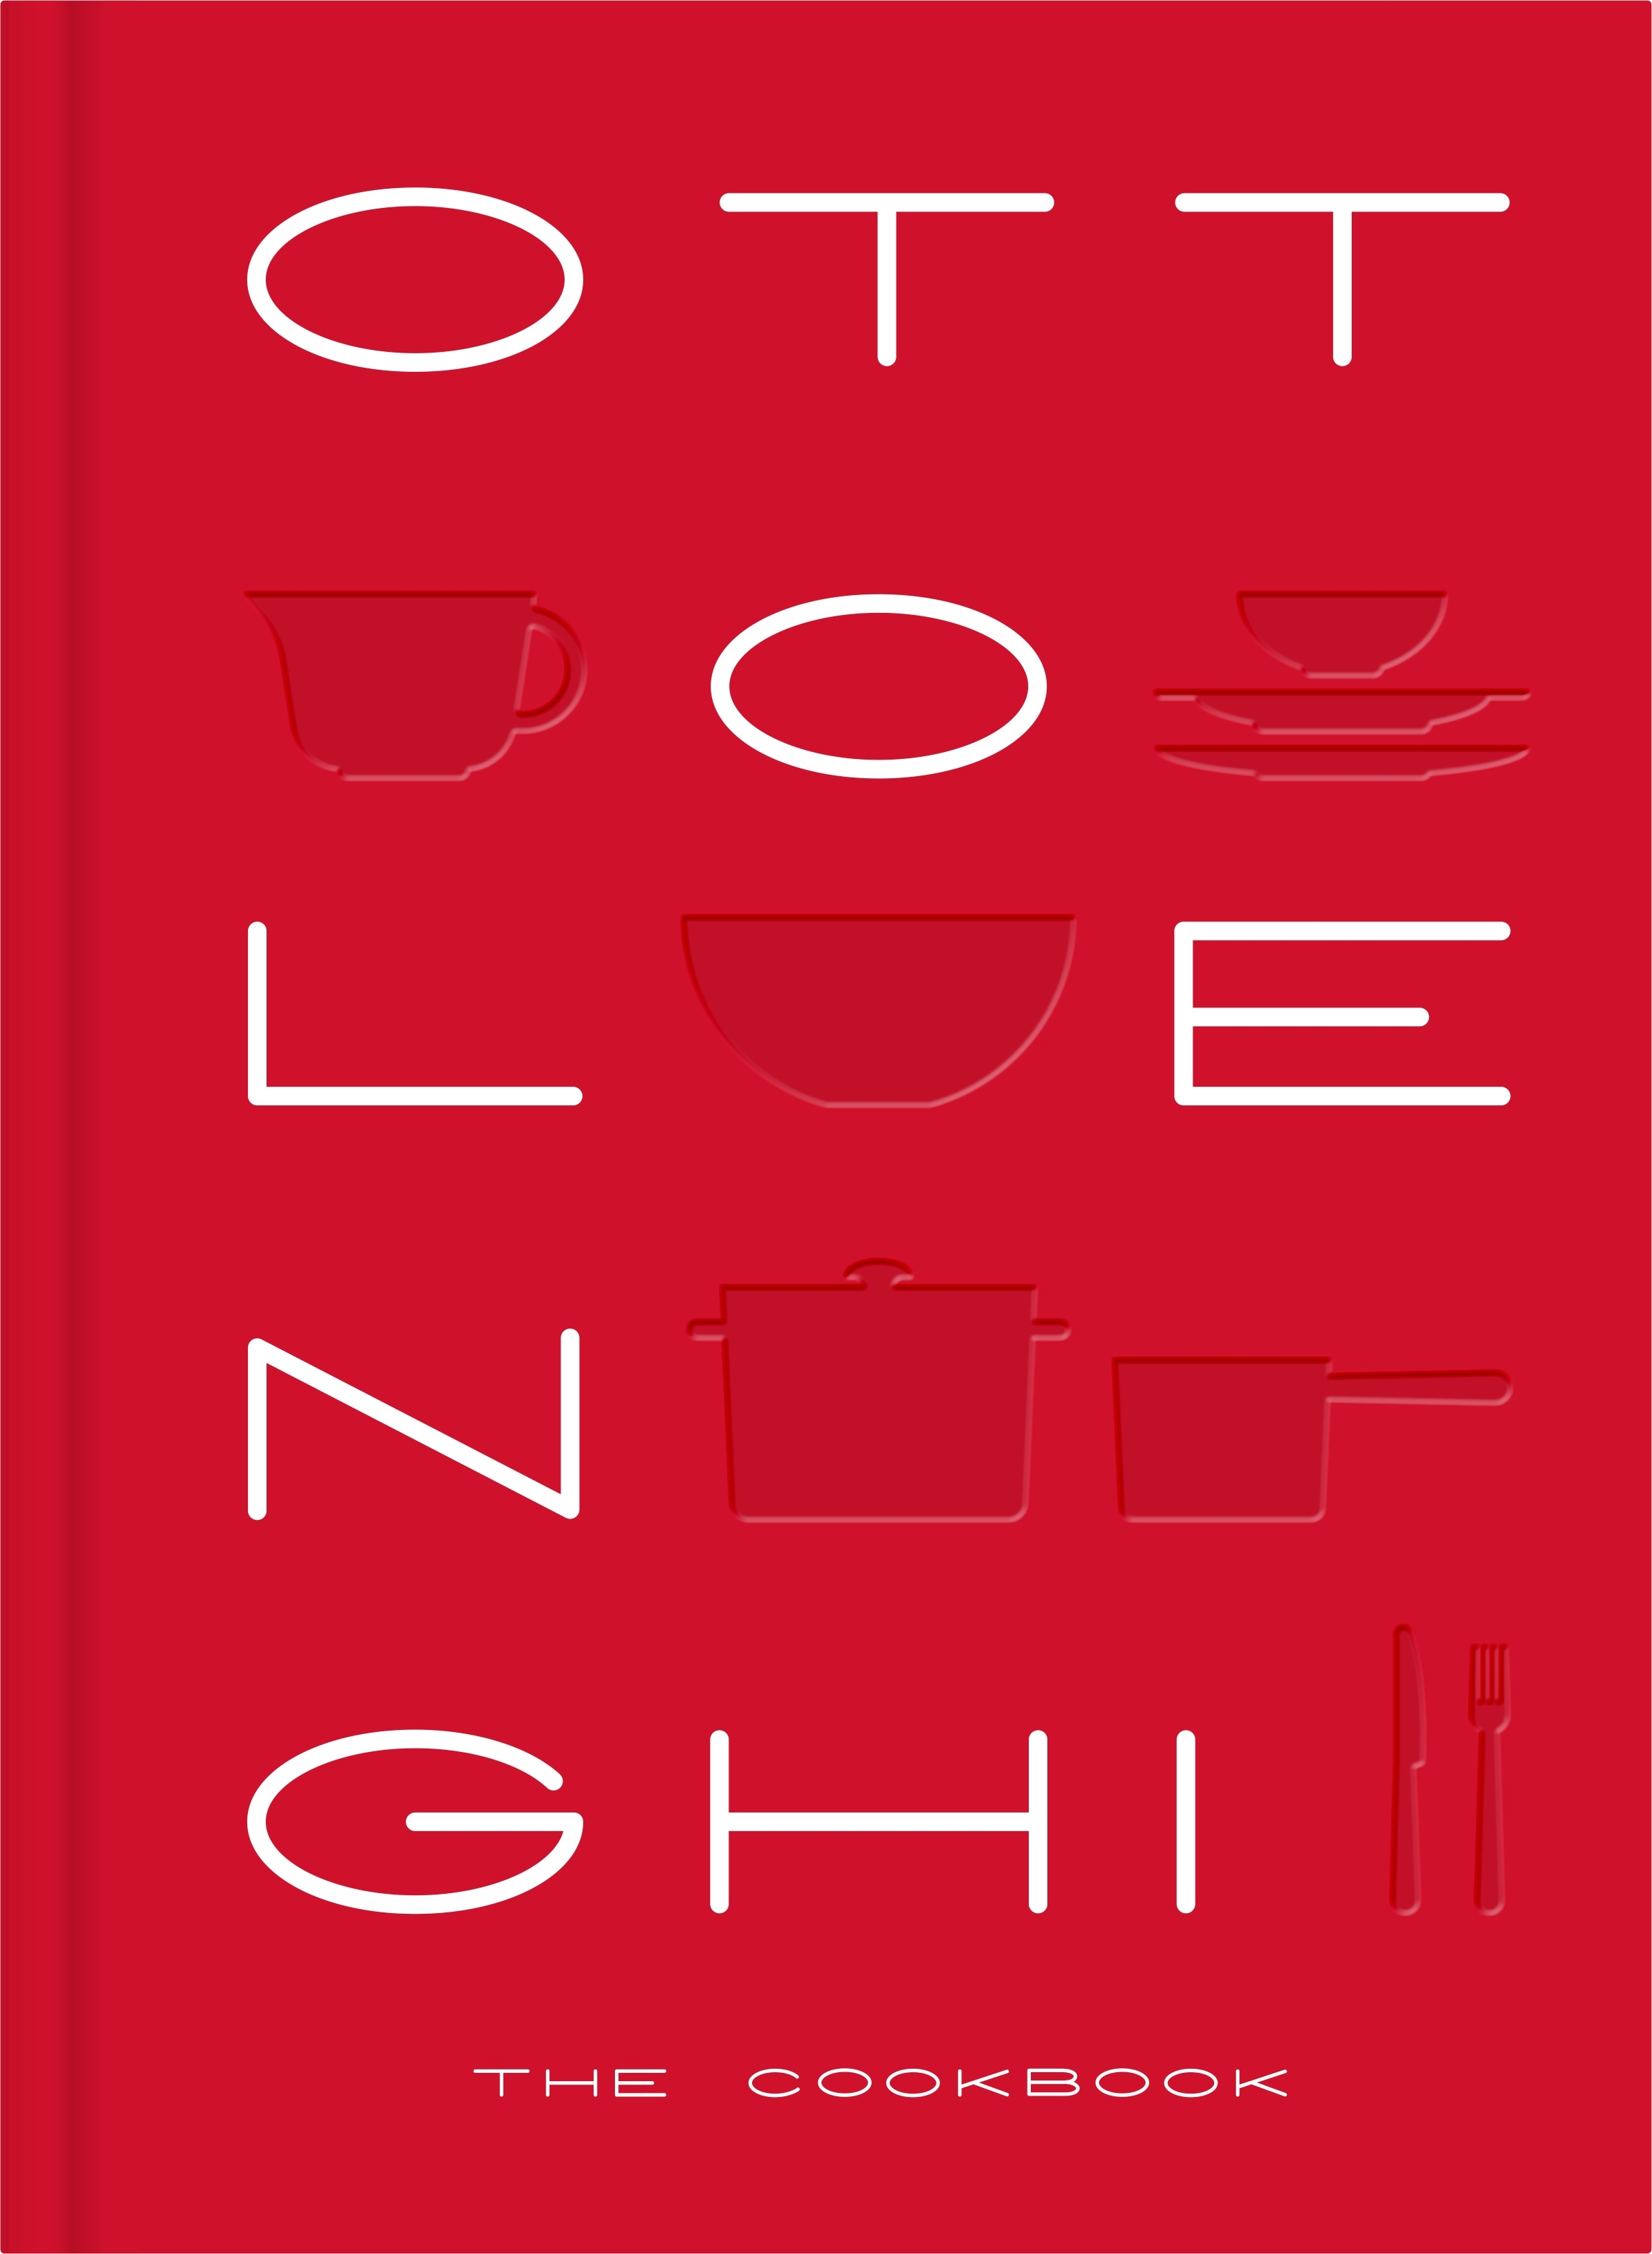 Ottolenghi Simple: A Cookbook: Ottolenghi, Yotam: 9781607749165:  : Books